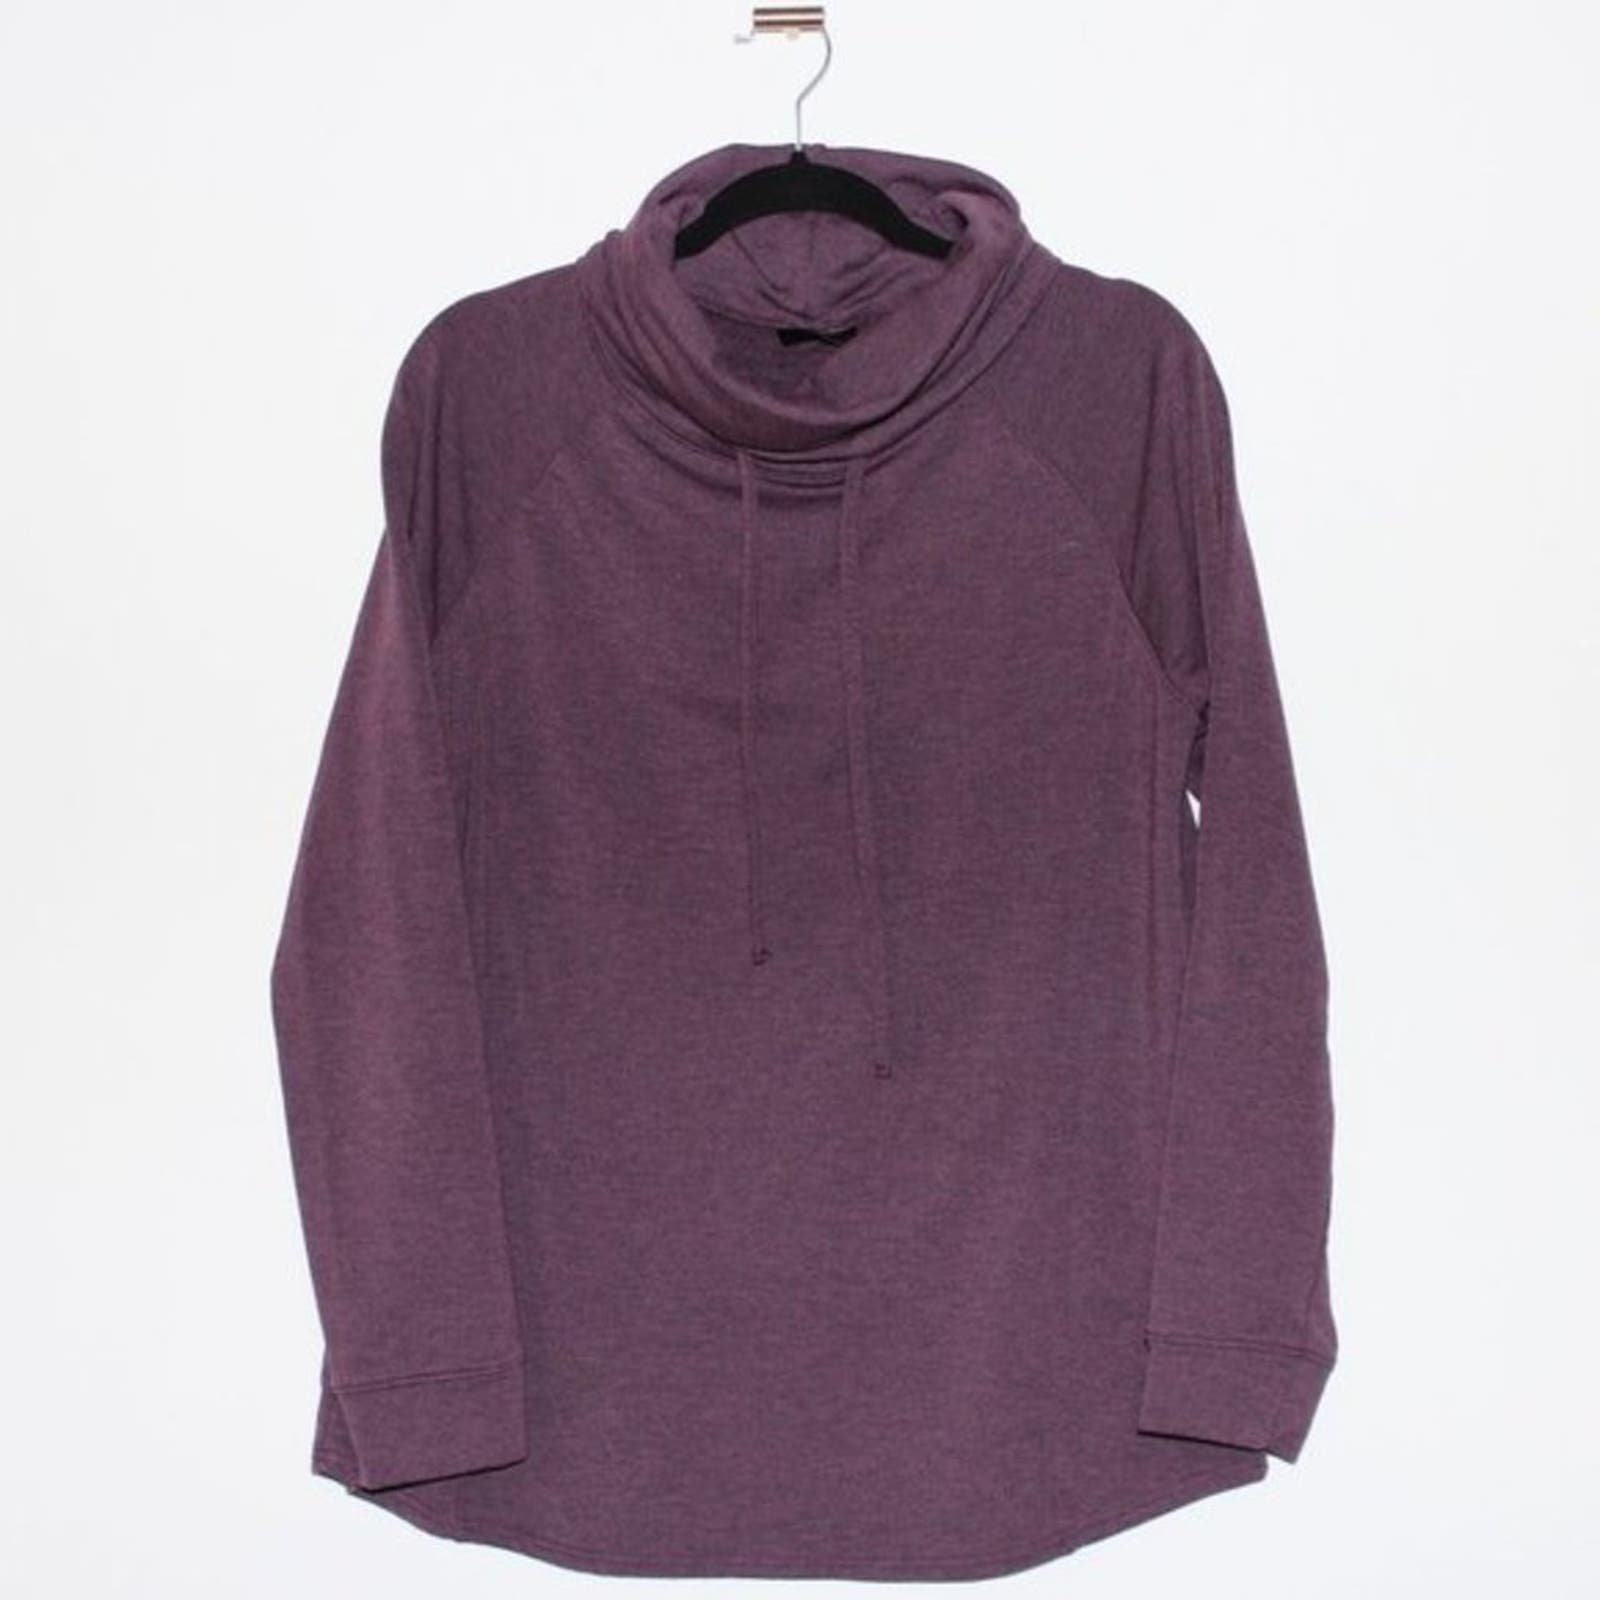 Comfortable Purple Long Sleeve Performance Sweatshirt Size Large fs3G0rhAy hot sale